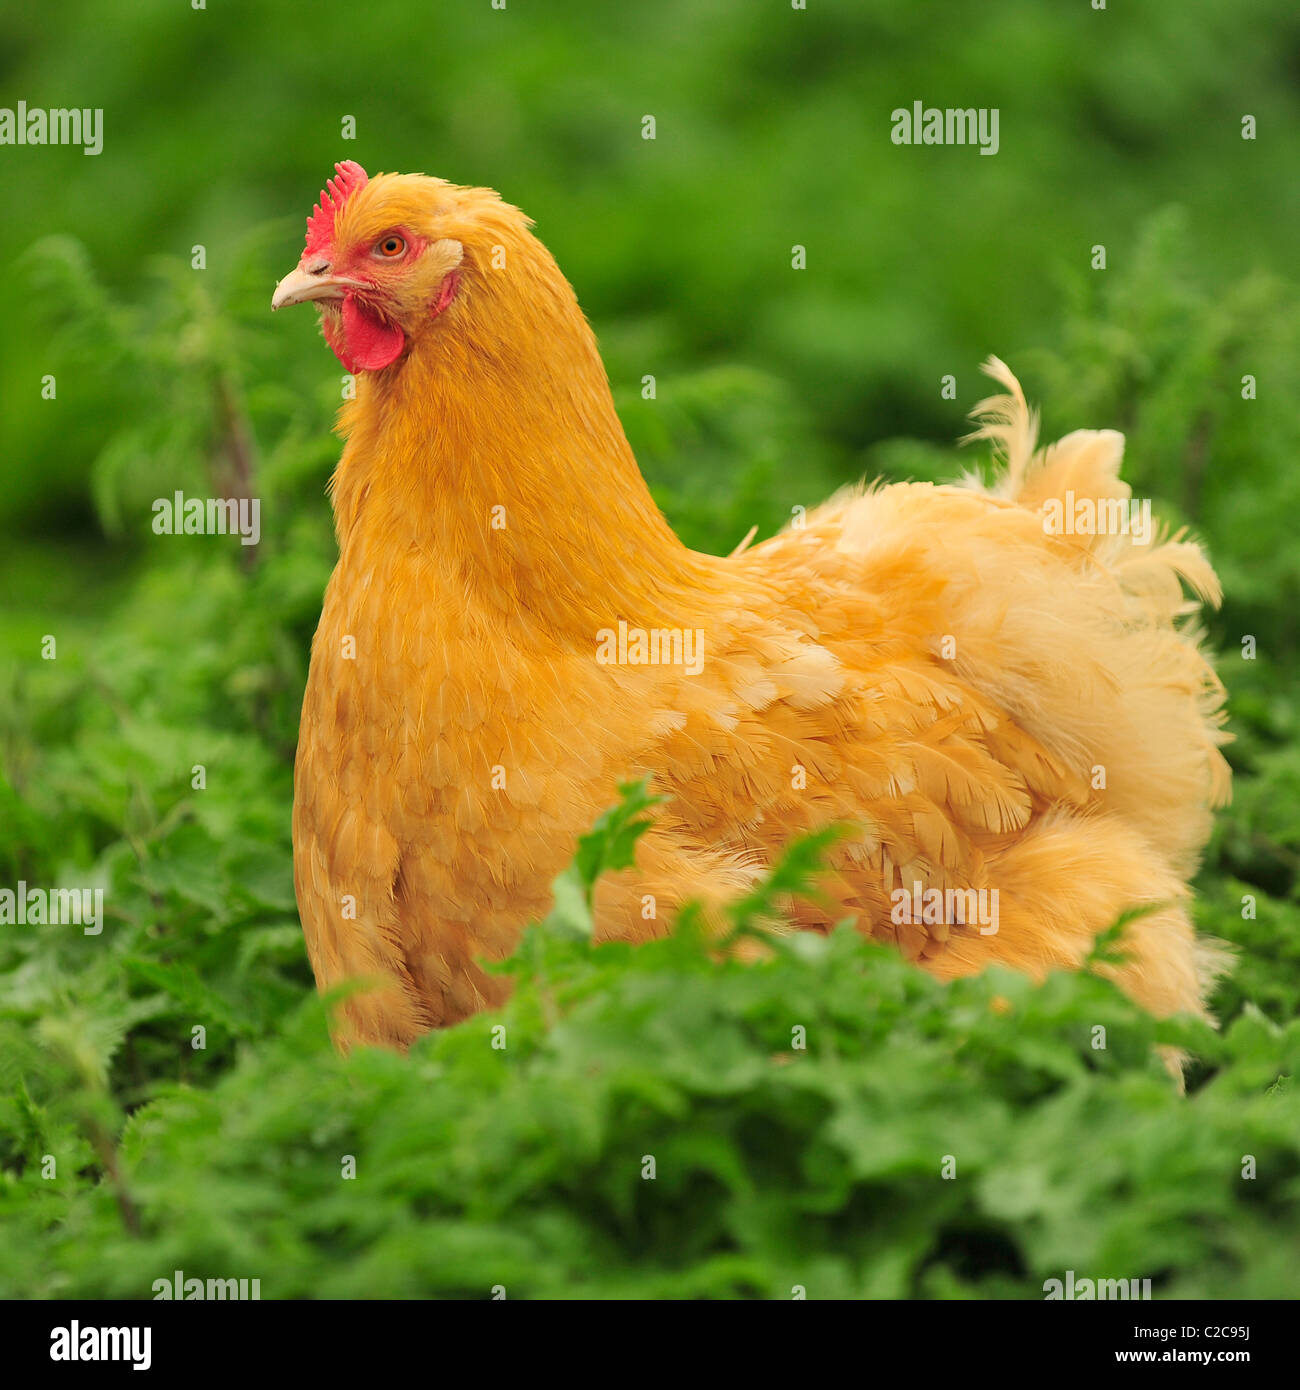 Buff orpington hen Stock Photo